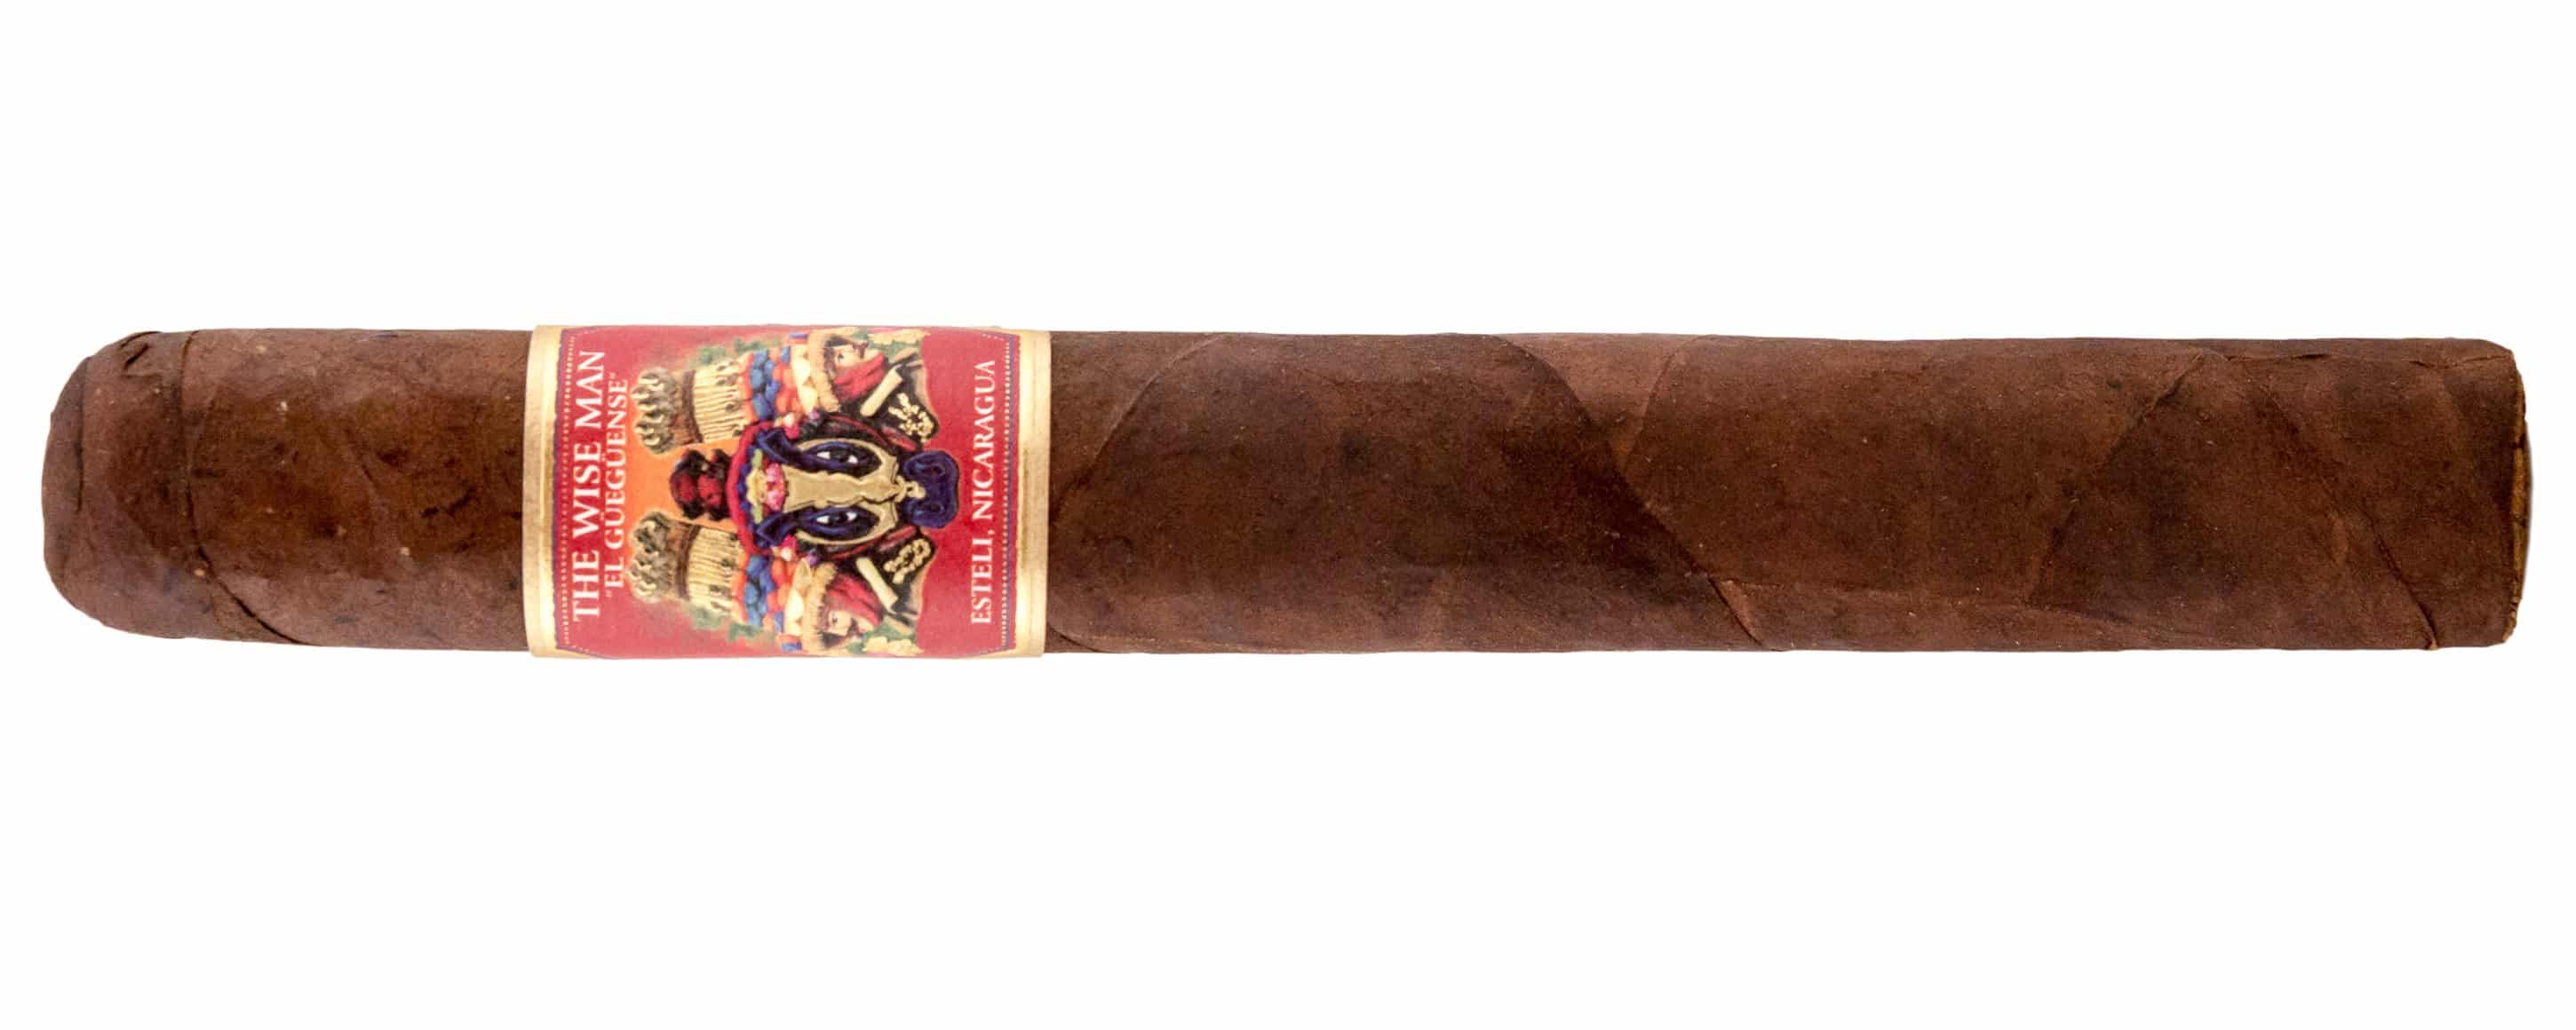 Blind Cigar Review: Foundation | The Wise Man (El Güegüense) Maduro Corona